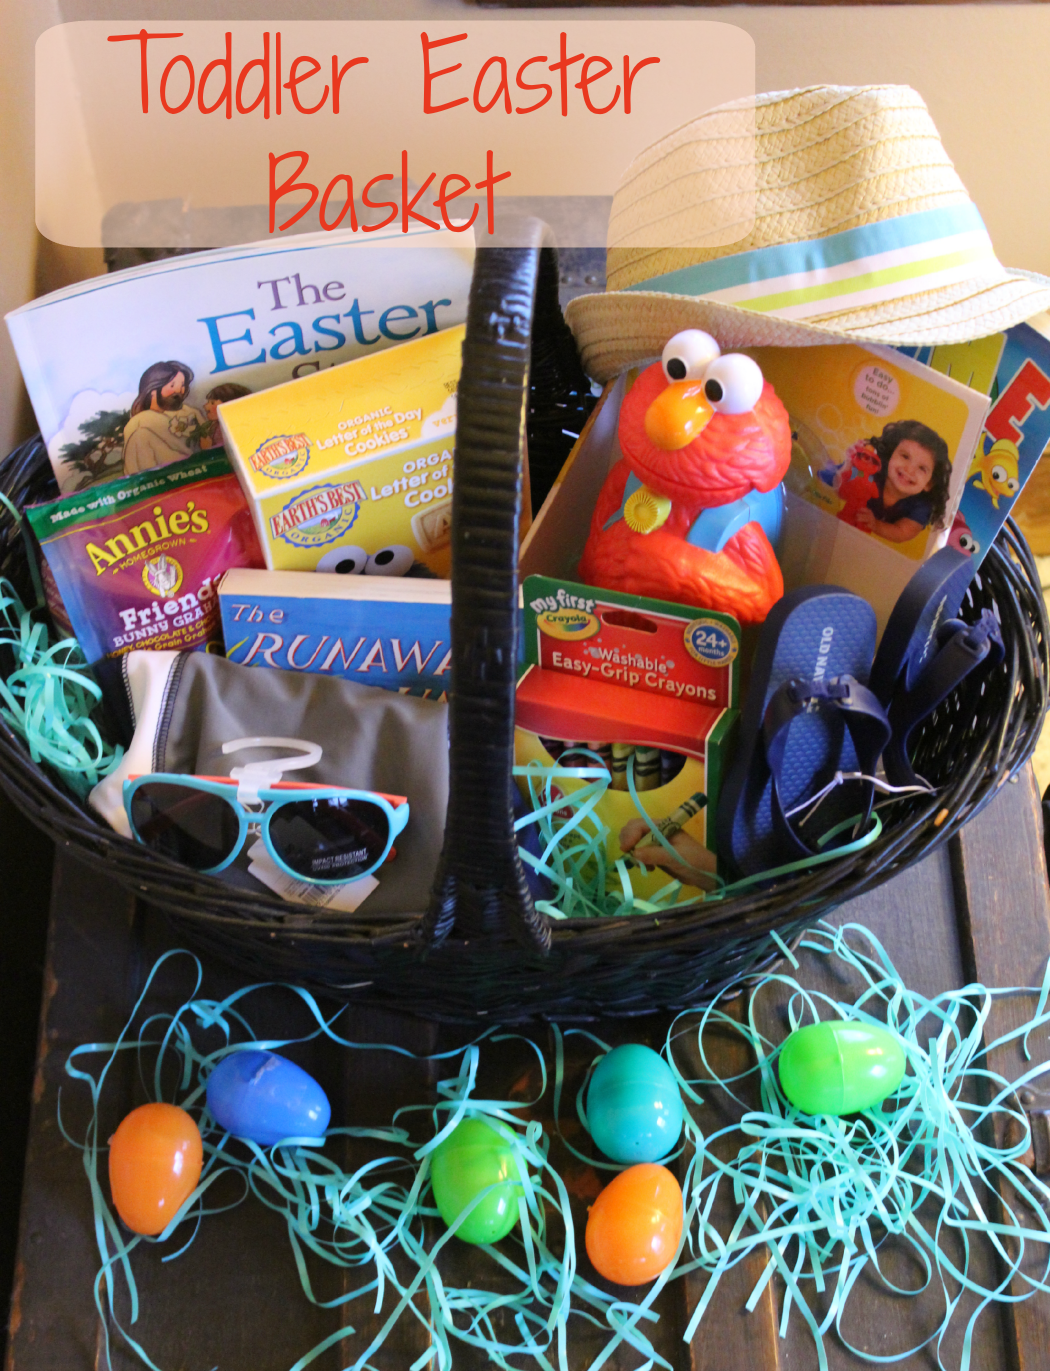 Toddler Easter Basket - Beautifully Candid